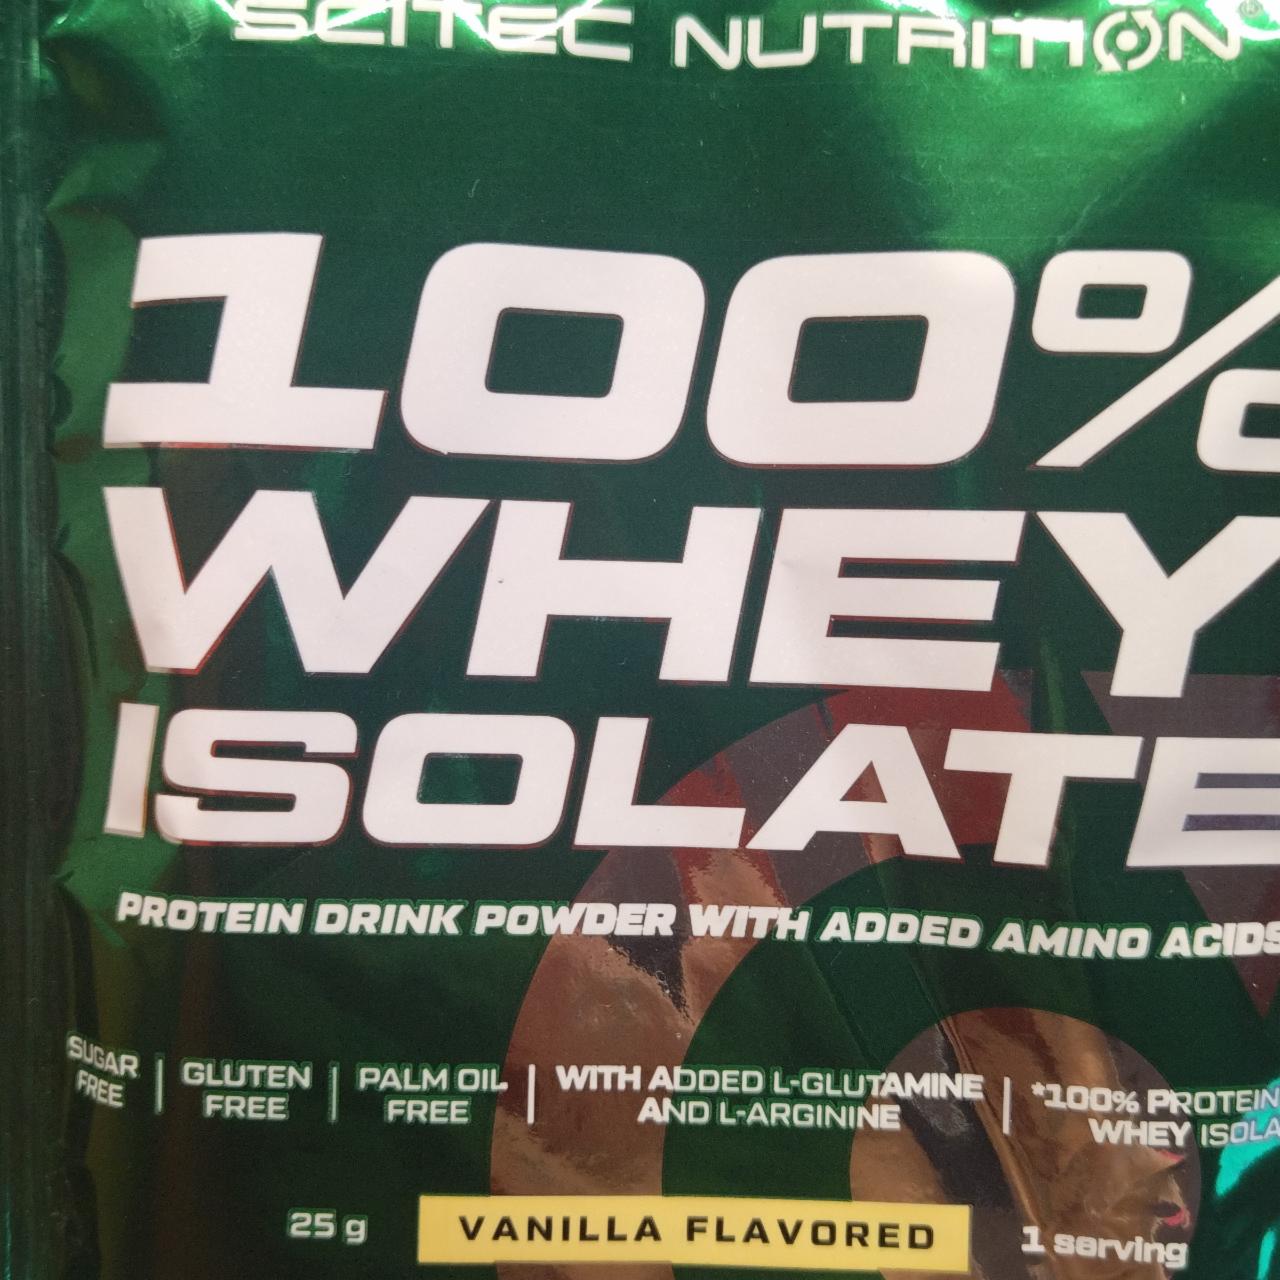 Fotografie - 100% Whey Isolate Protein Drink Powder Vanilla flavored Scitec Nutrition